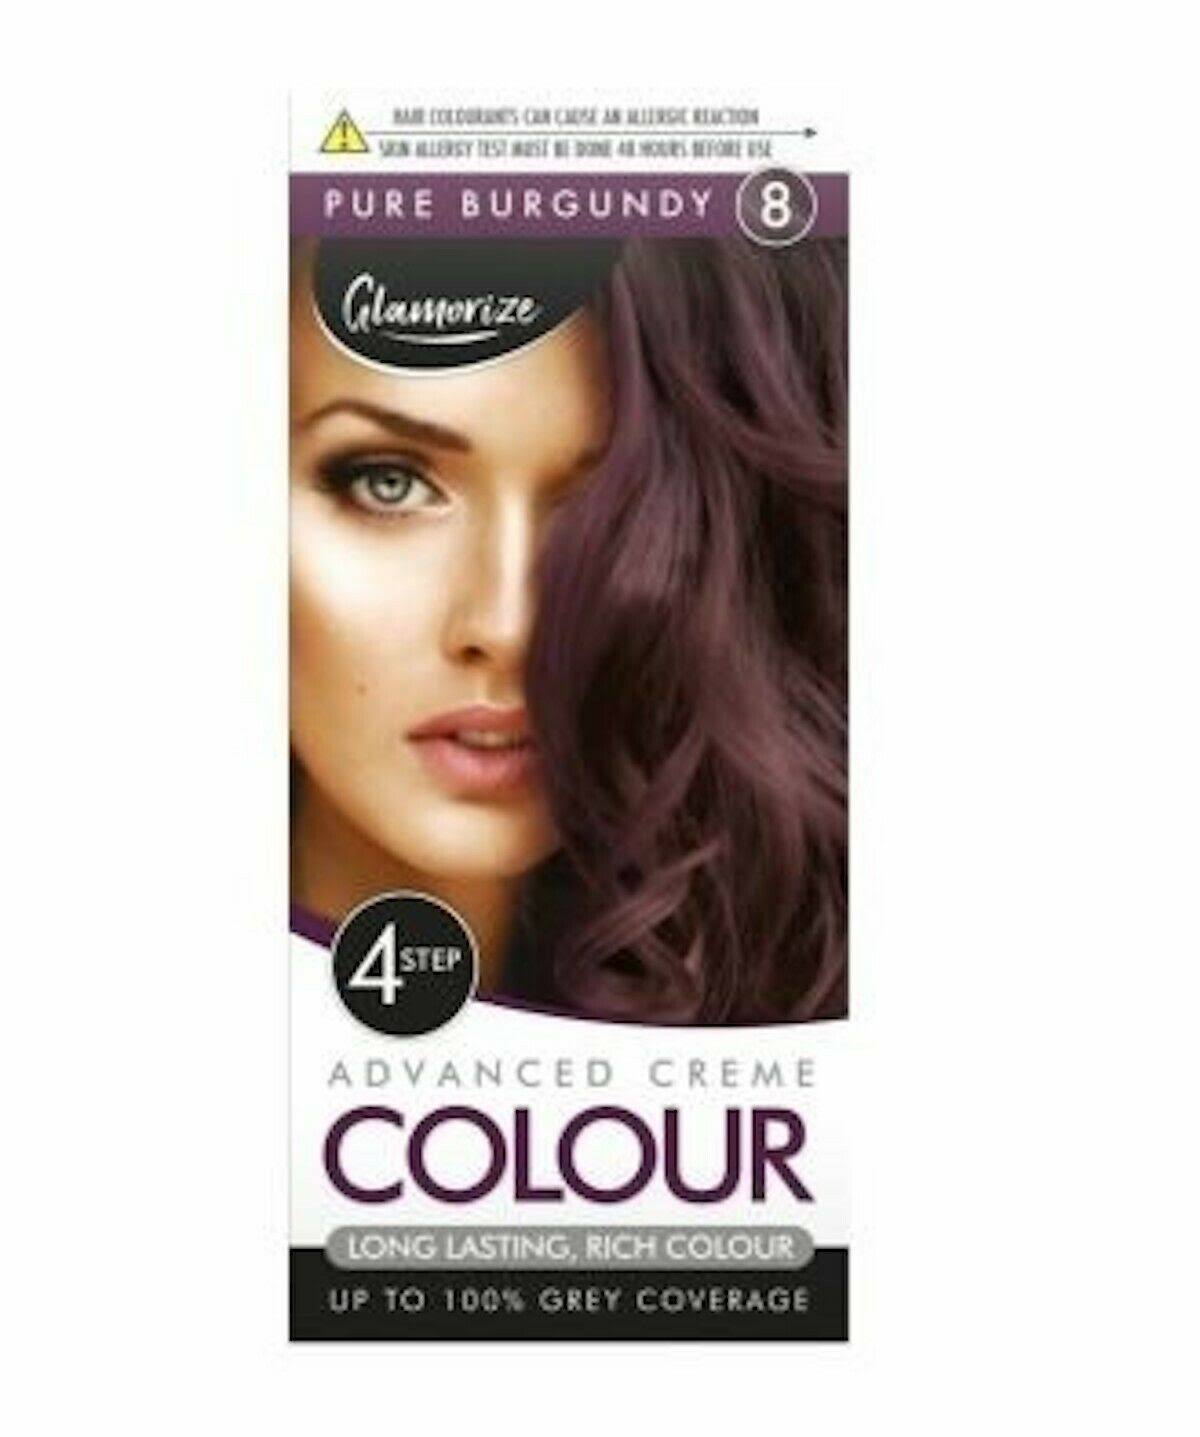 Glamorize Advanced Creme Colour 4 Step Permanent Hair Dye Shade Pure Burgundy 8